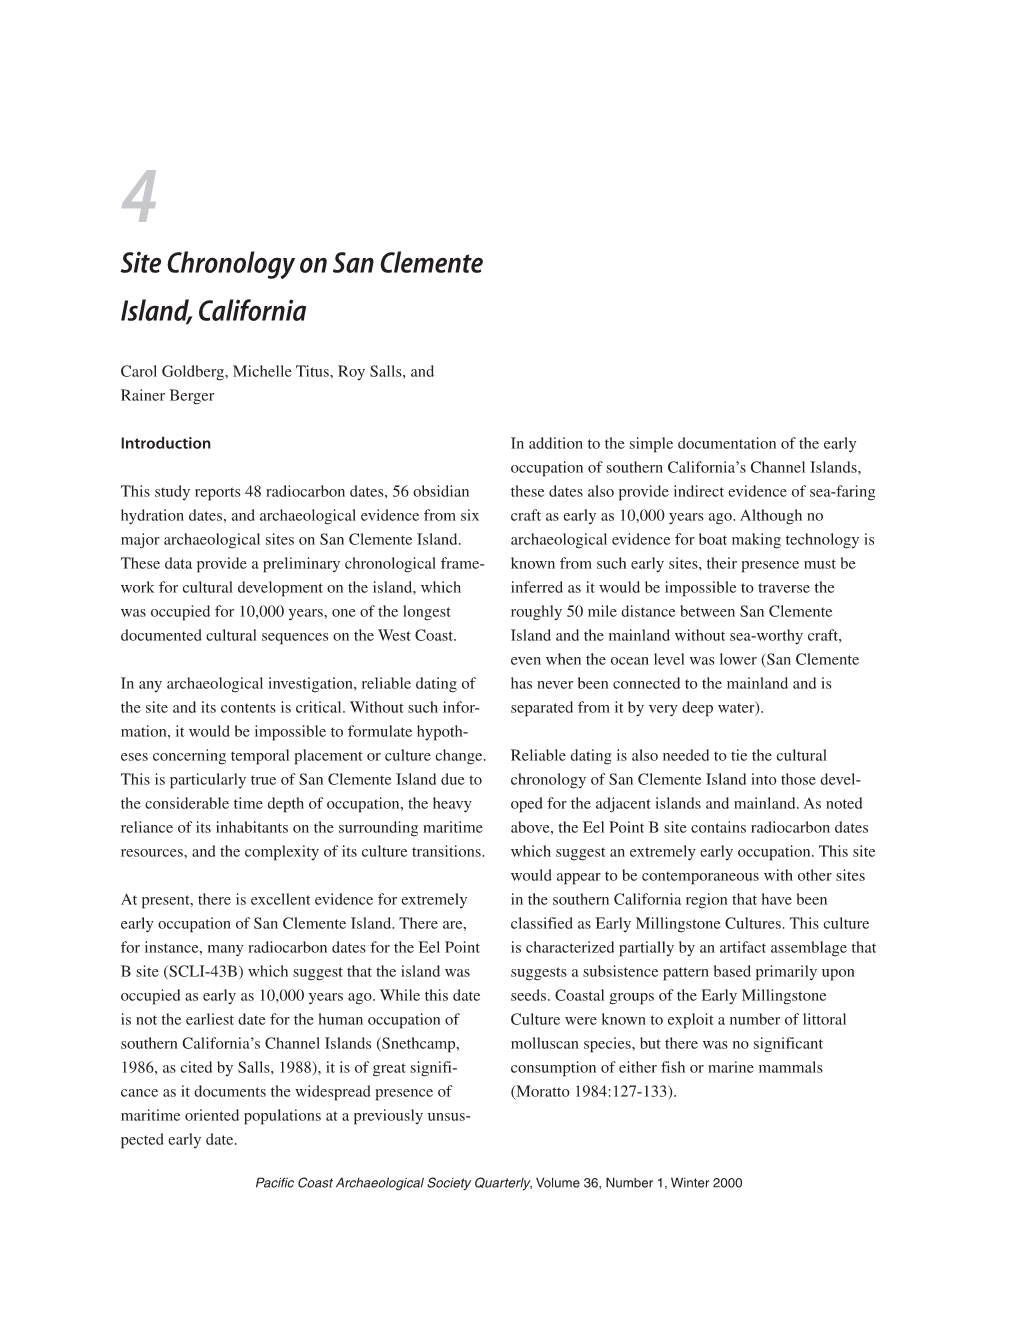 Site Chronology on San Clemente Island, California